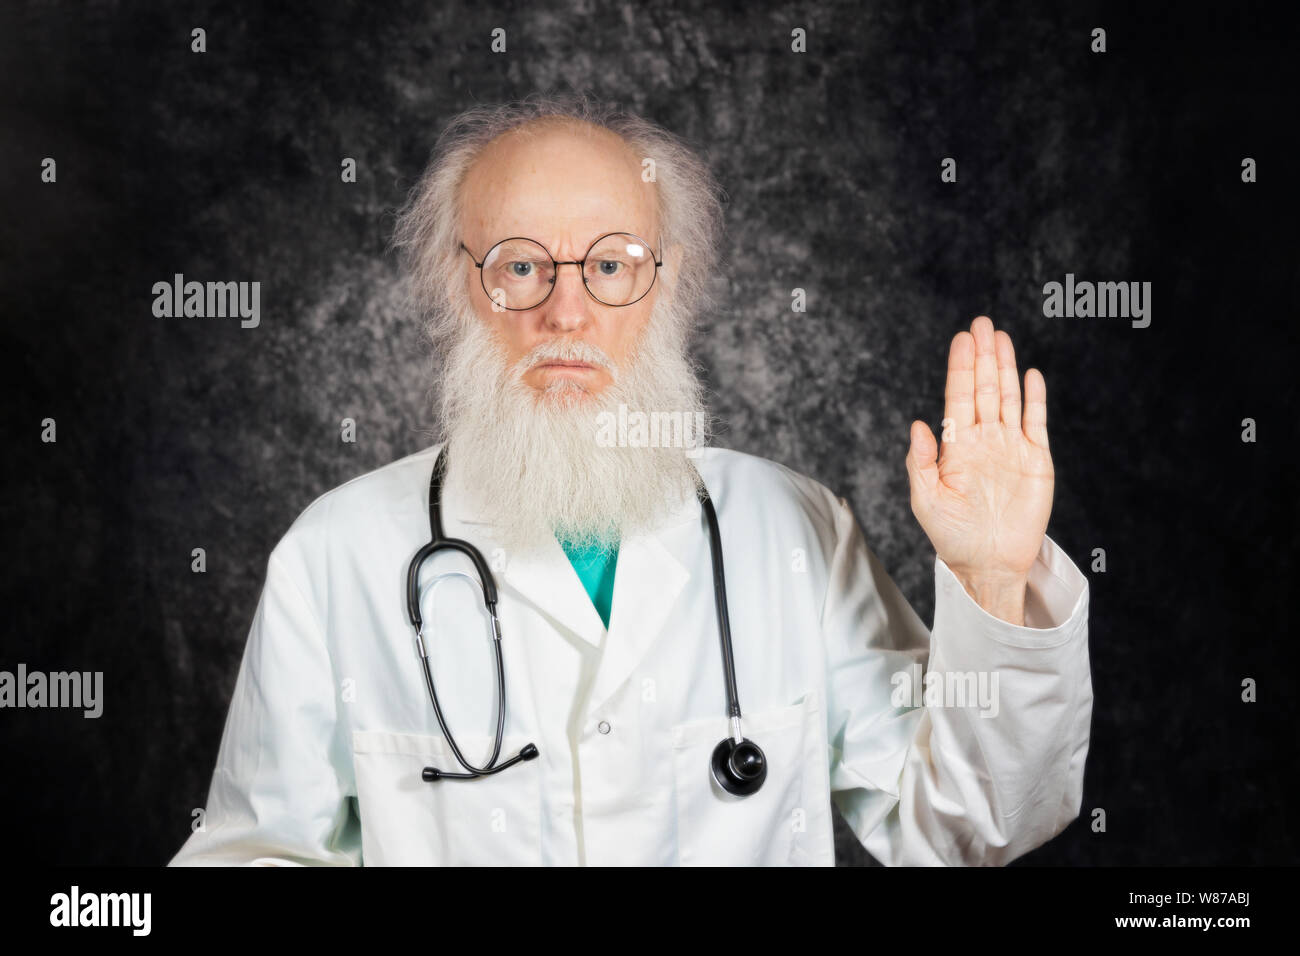 Infelice medico senior con grande barba Foto Stock